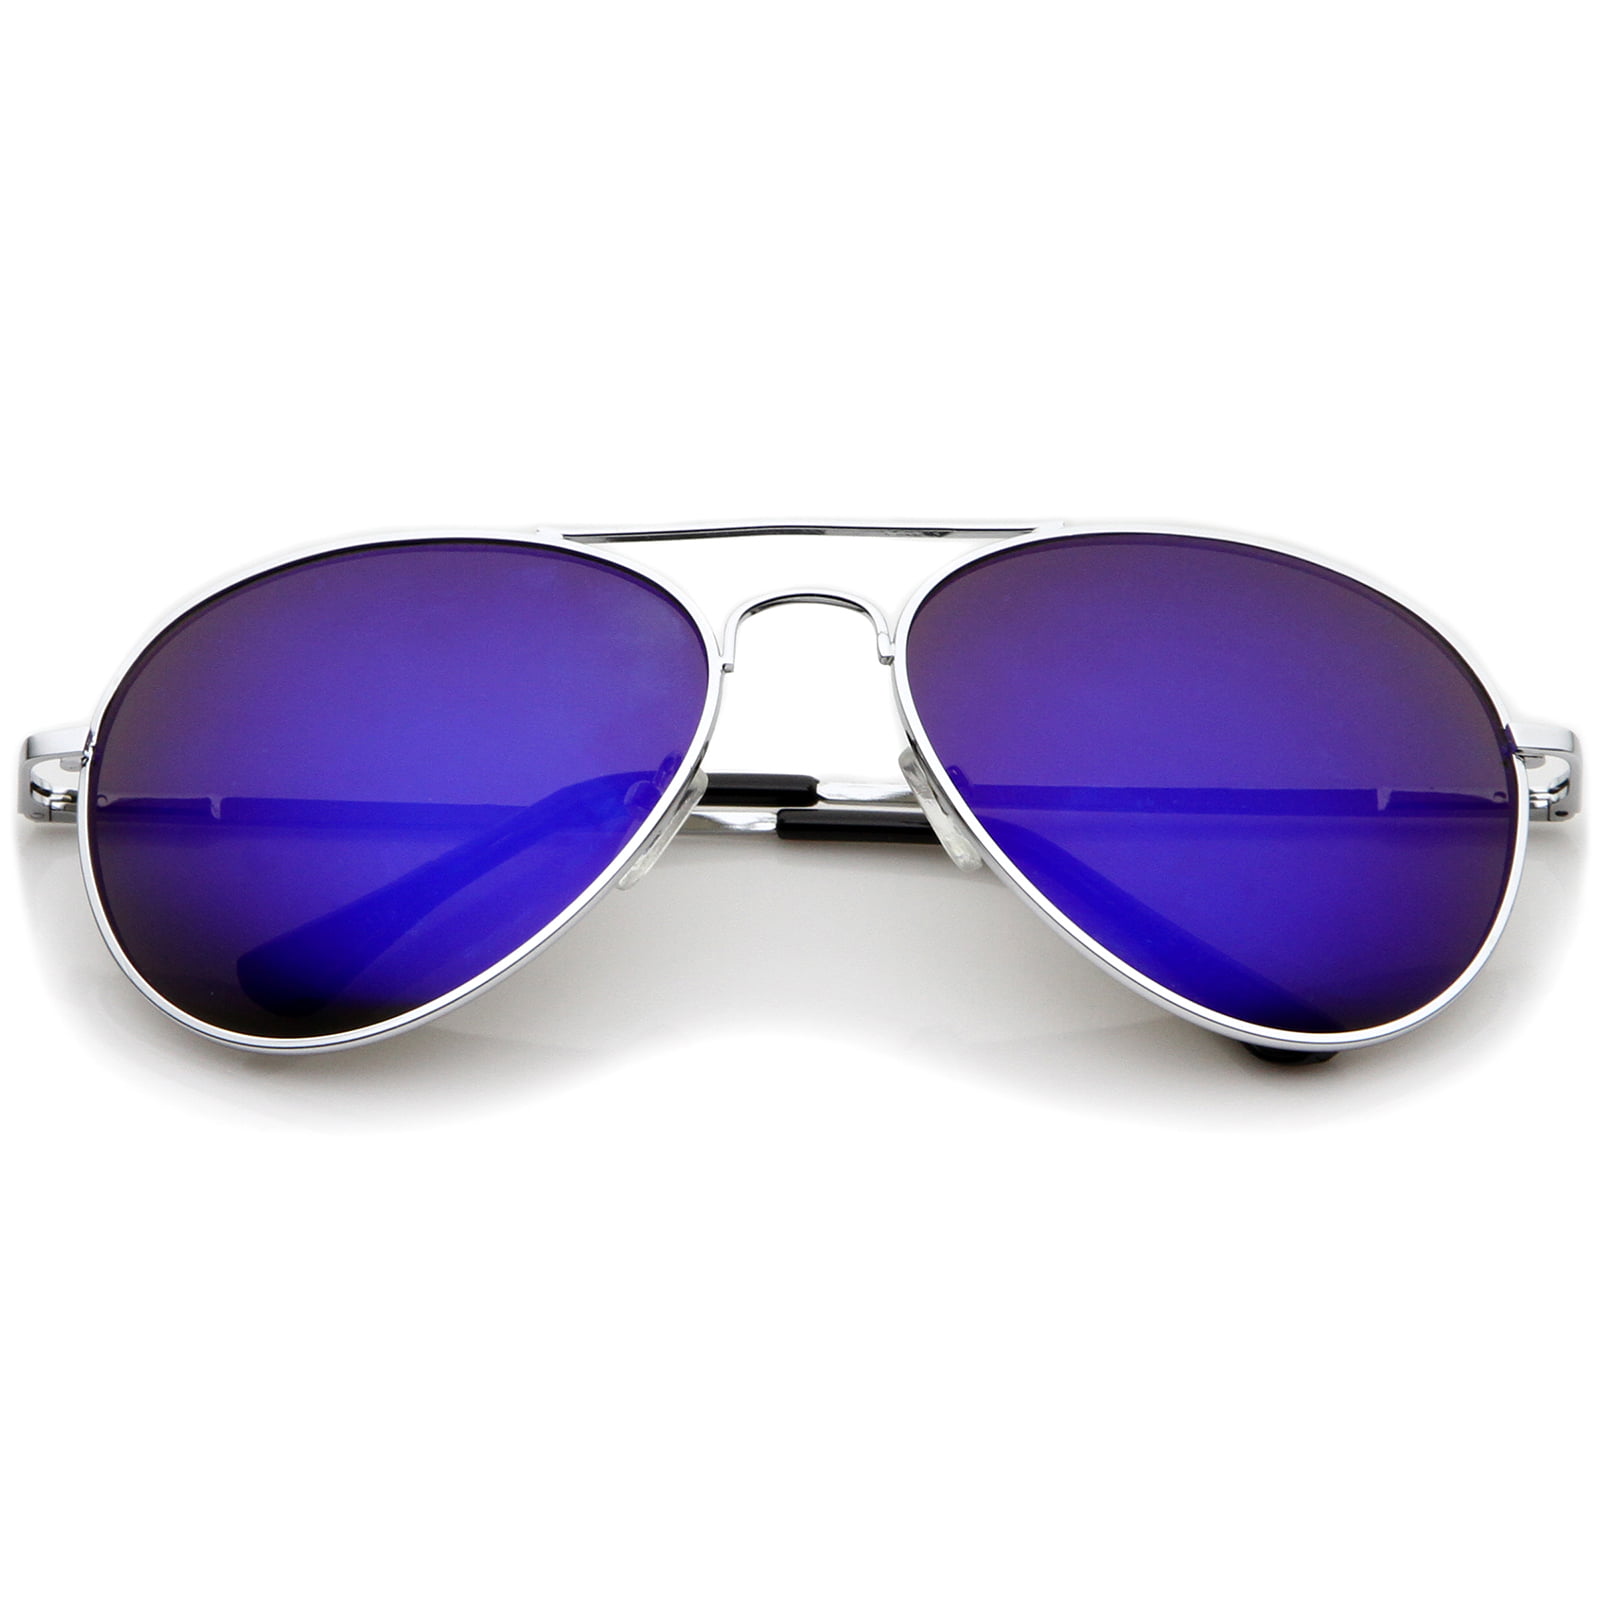 AVIATOR Sunglasses SPRING HINGE CLASSIC Pilot Design for MEN/WOMEN BLUE 